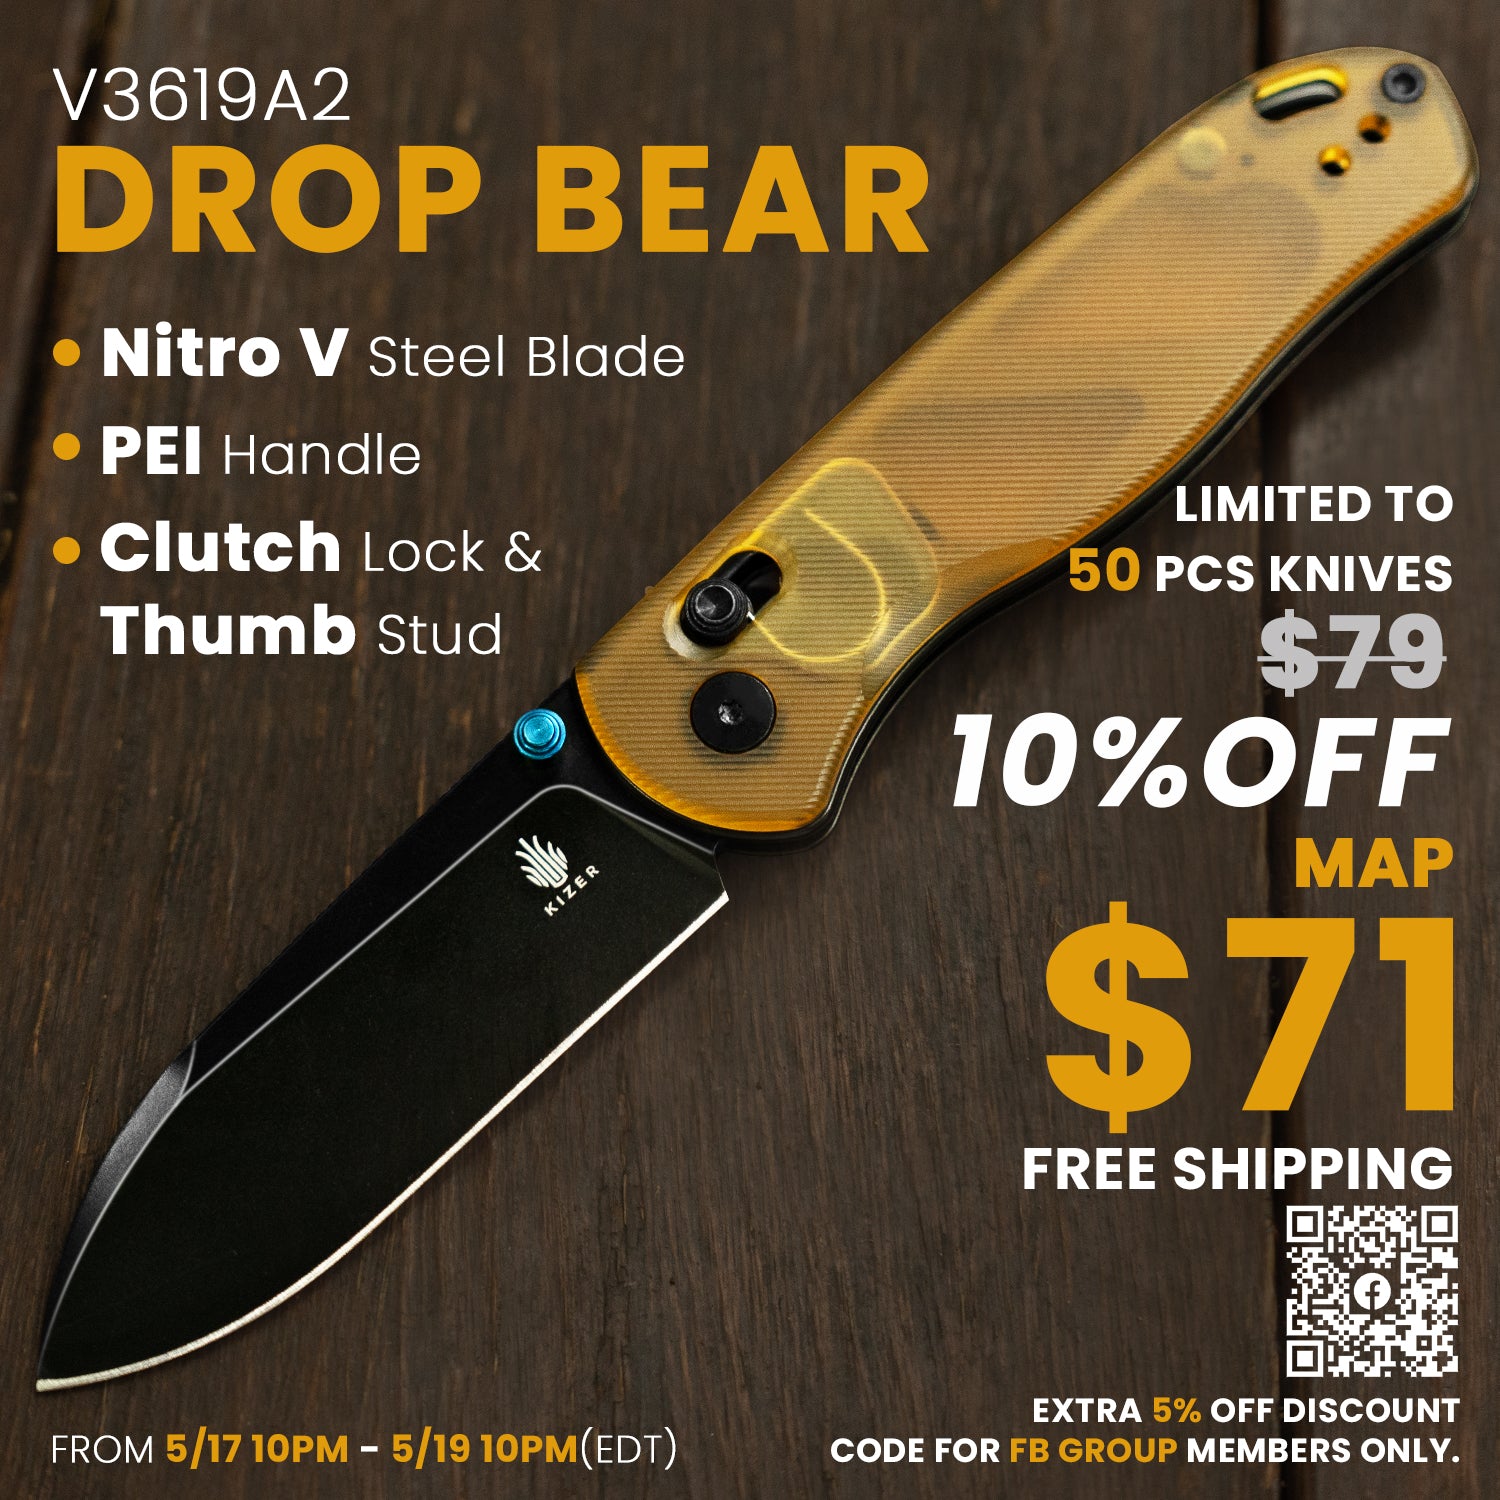 Drop Bear 2.97 inch Nitro V Blade PEI Handle V3619A2-Kizer